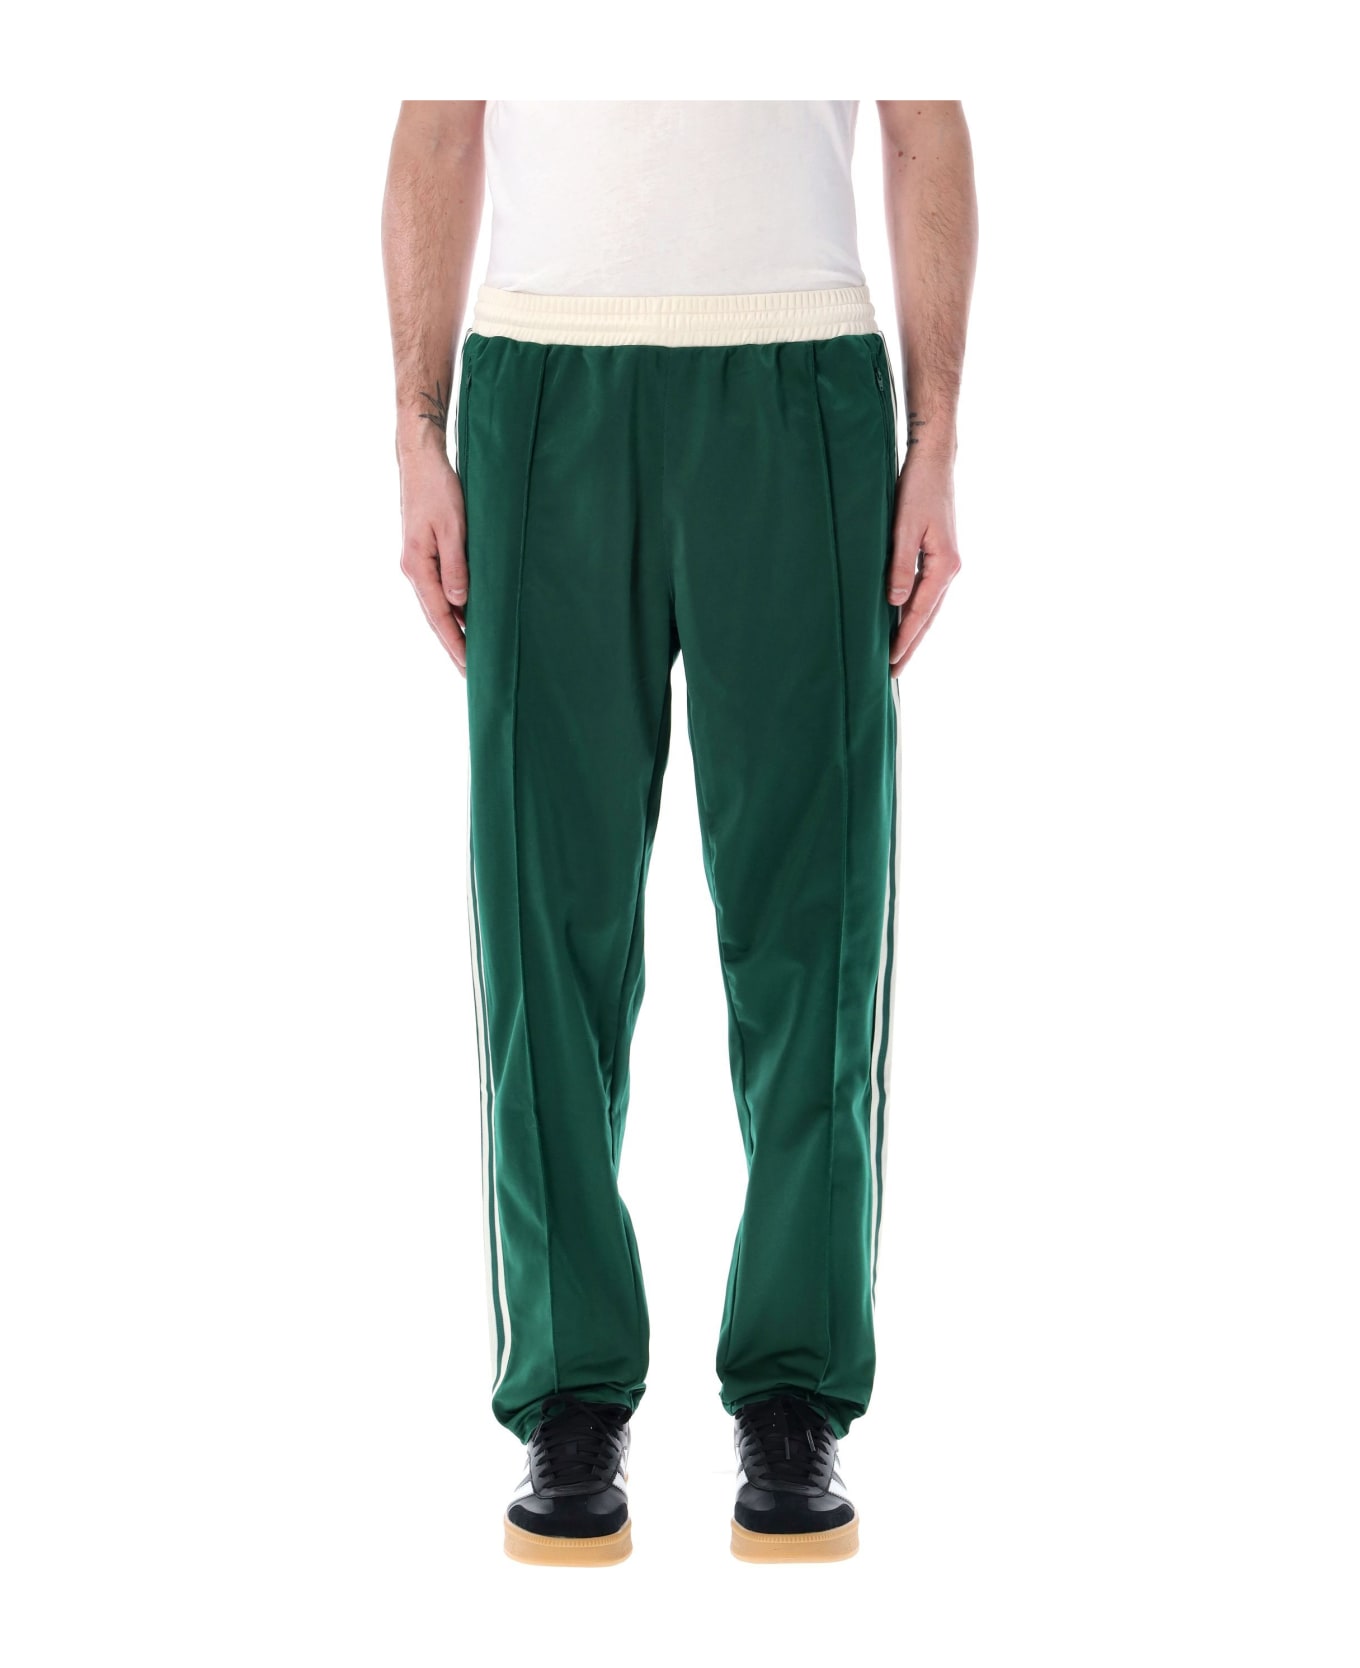 Adidas Originals Sst Track Pants - WHITE/GREEN